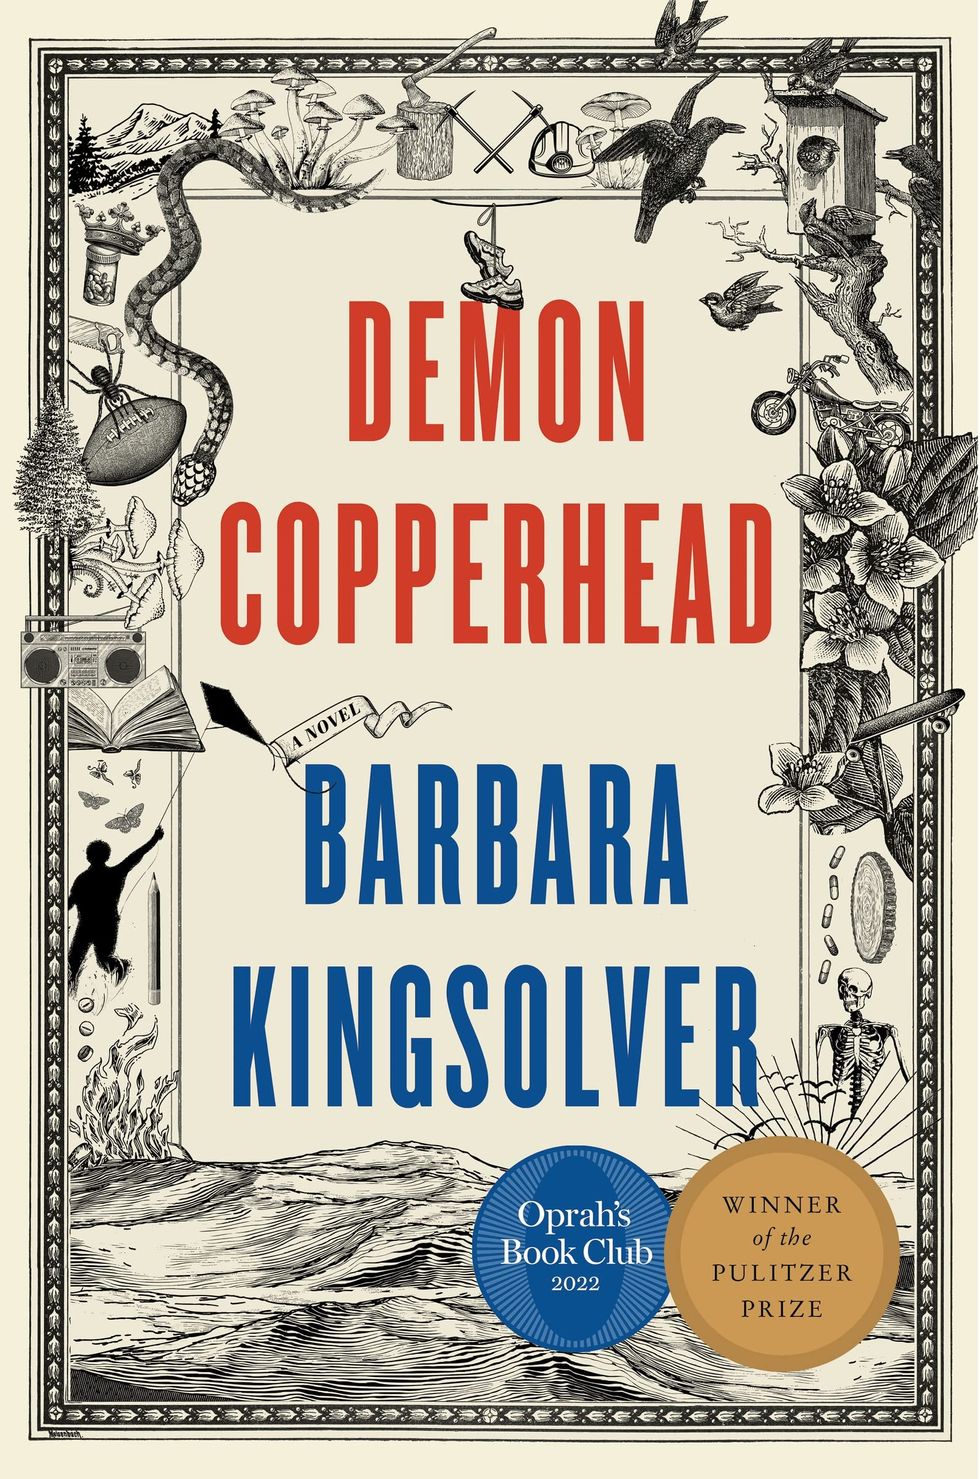 "Demon Copperhead" by Barbara Kingsolver